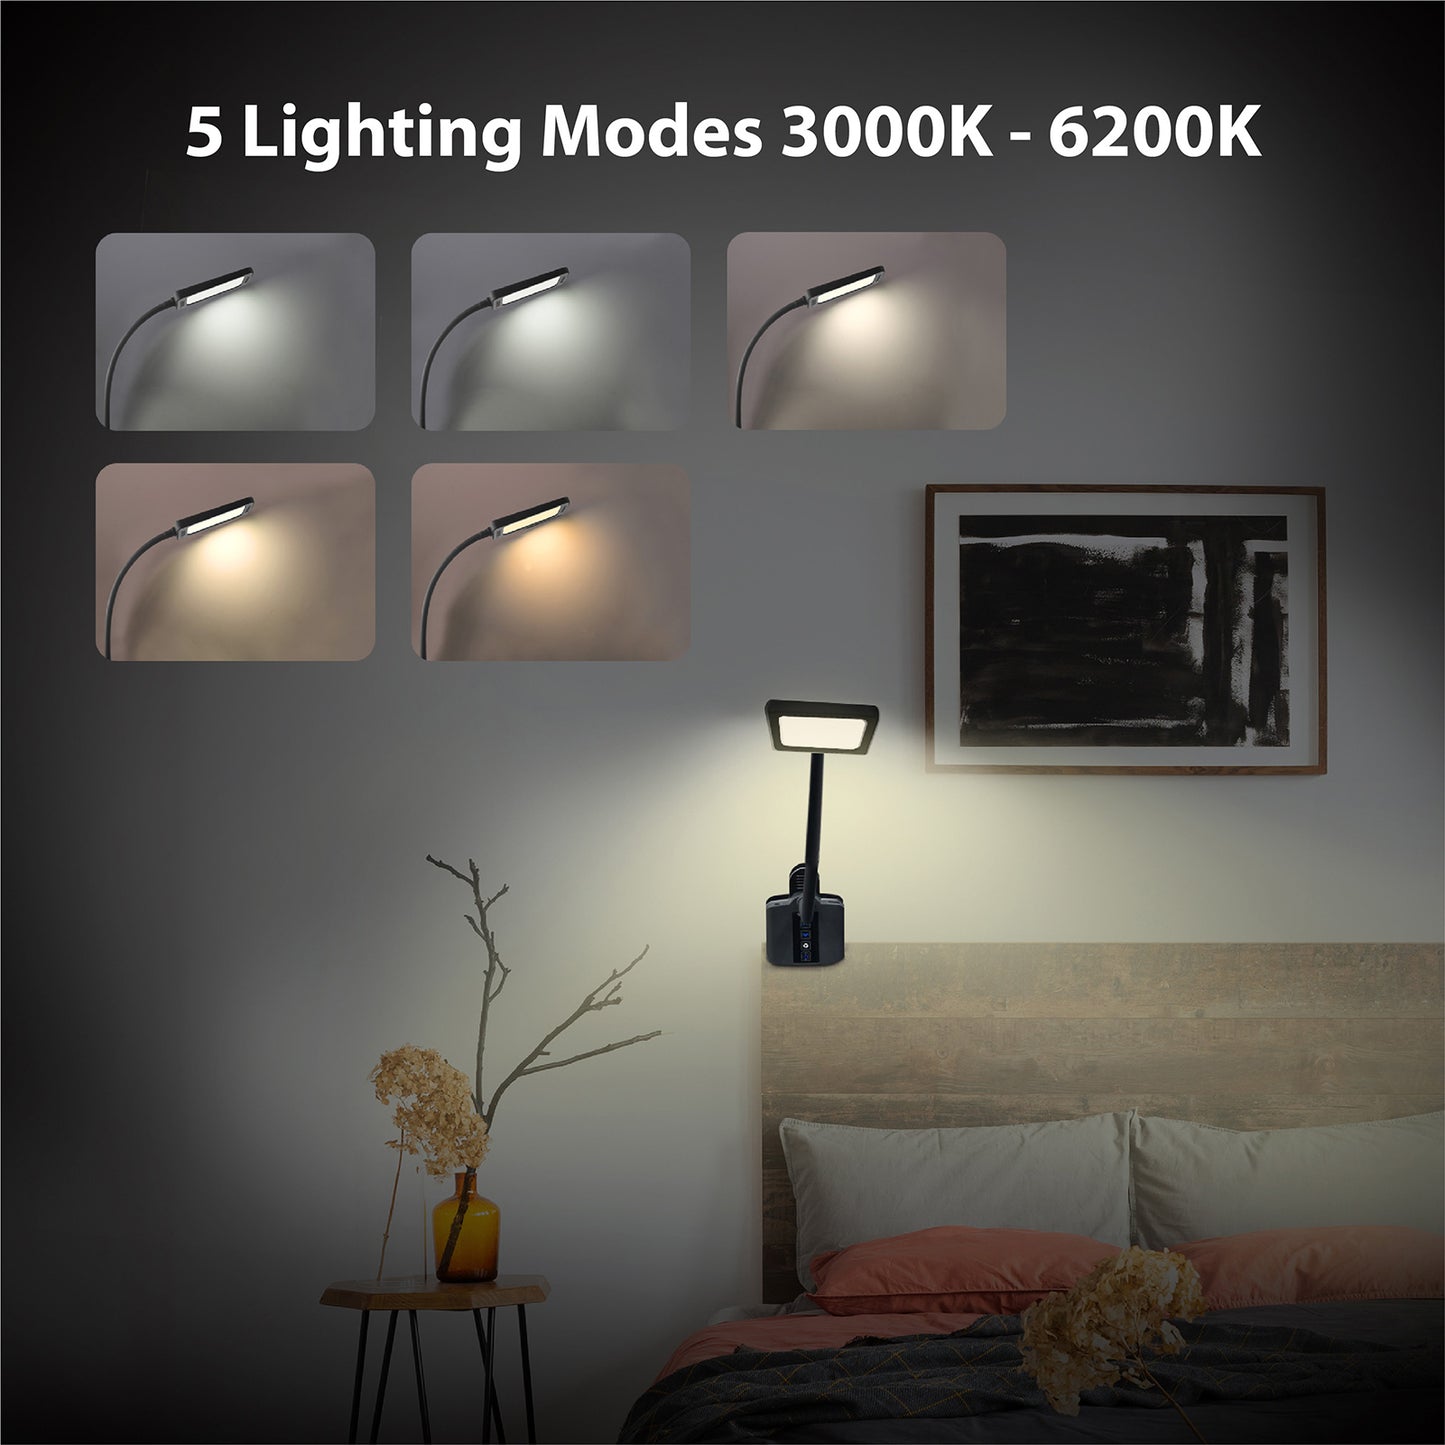 LED Clamp Lamp 5 Lighting Modes